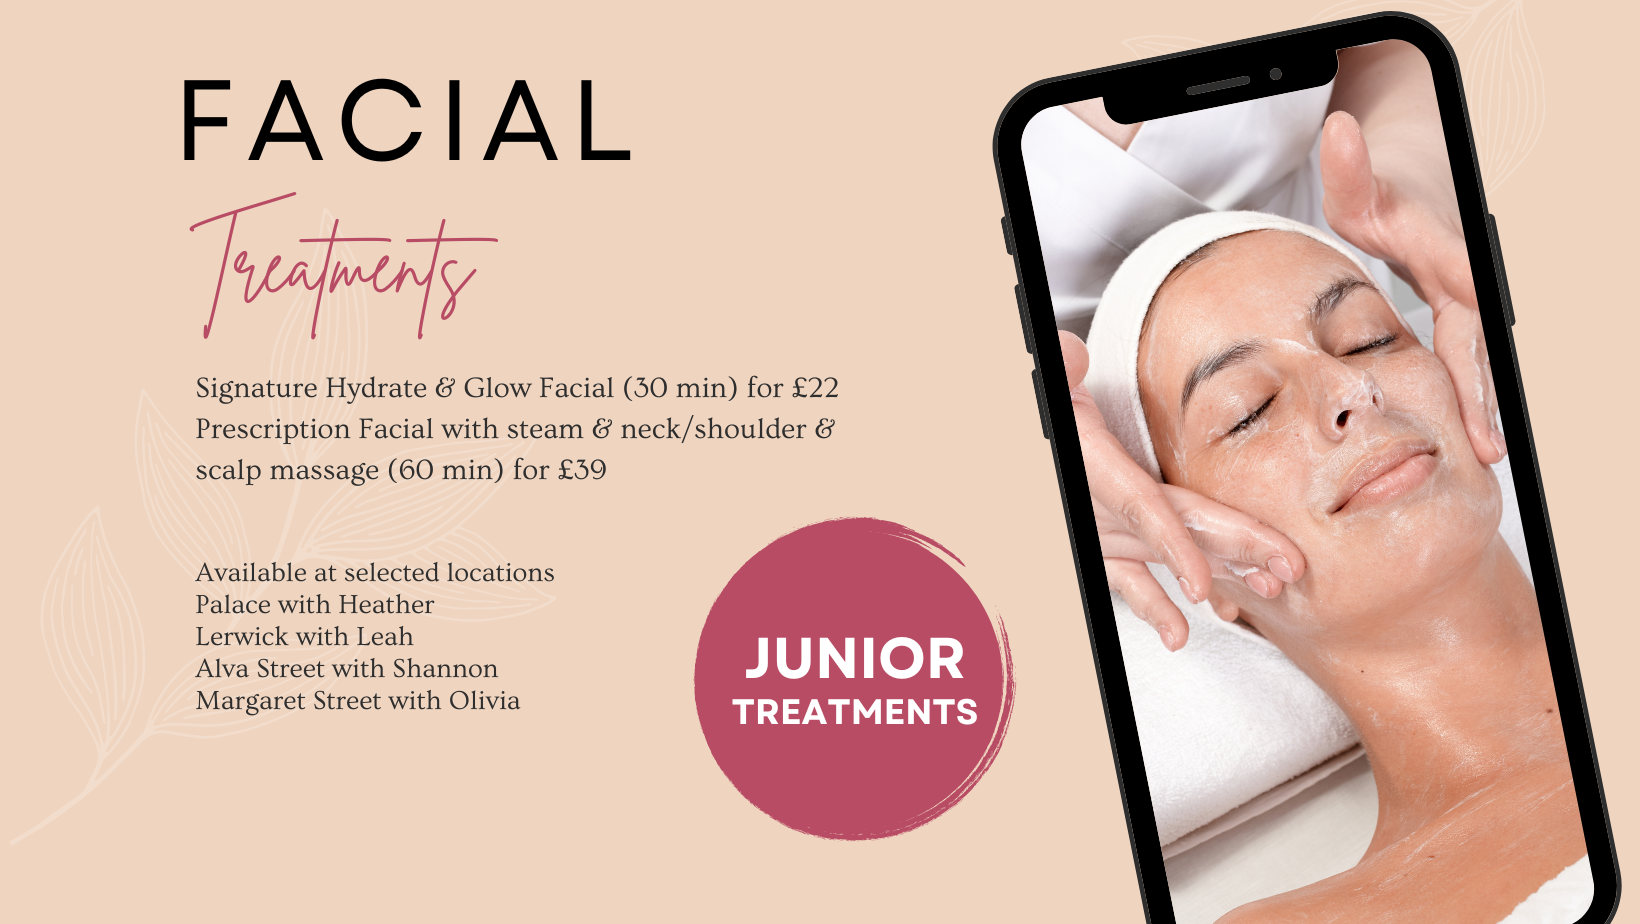 Facial Treatment & Skincare Social Media Template (Facebook Cover) (2).png